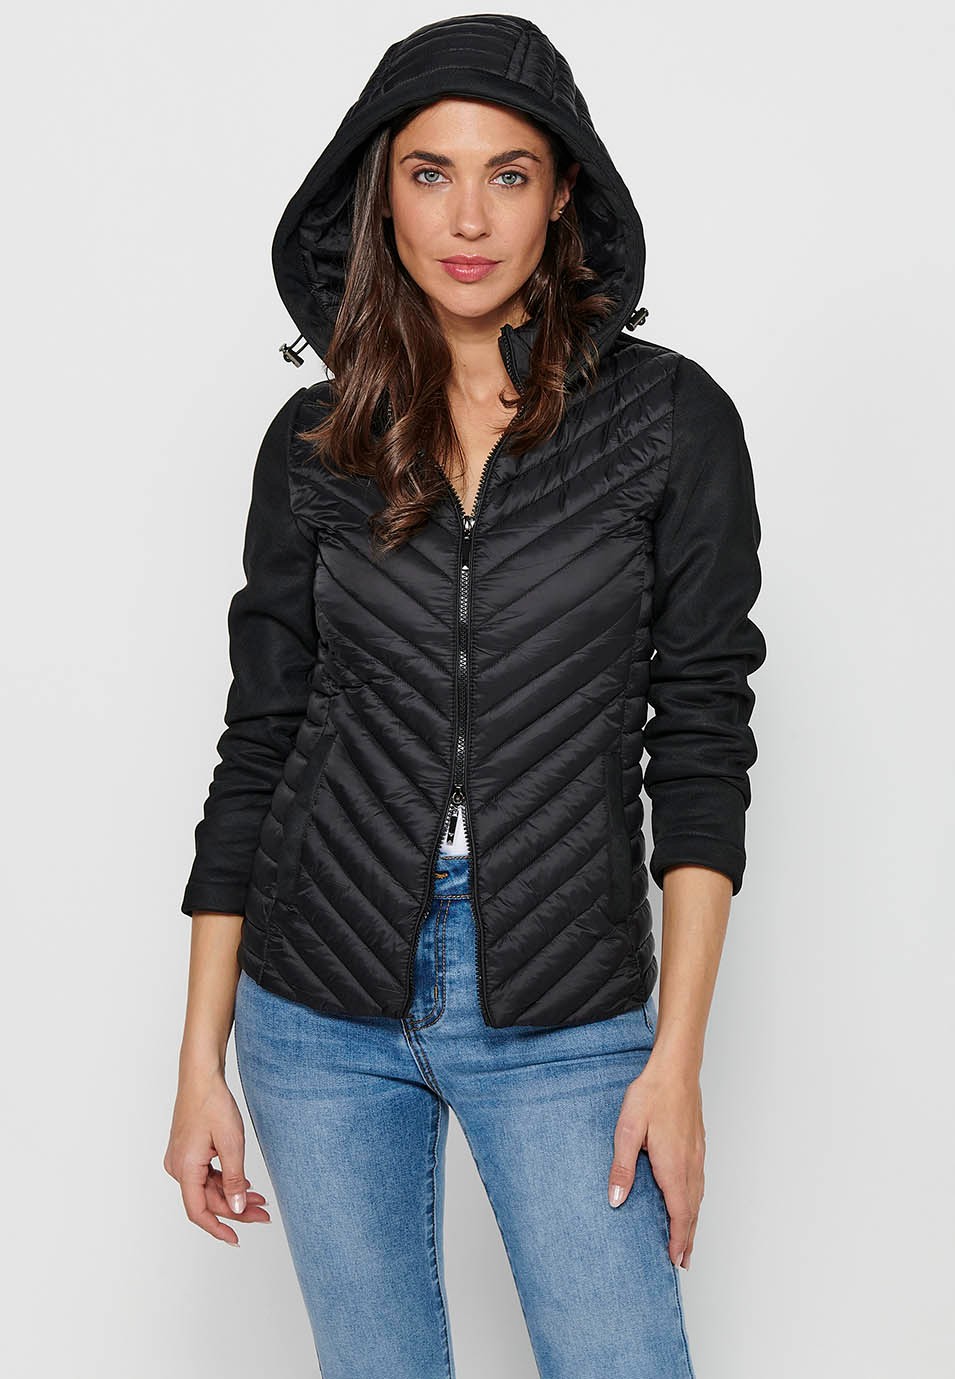 Women's Black Hooded Collar Long Sleeve Zipper Front Closure Jacket